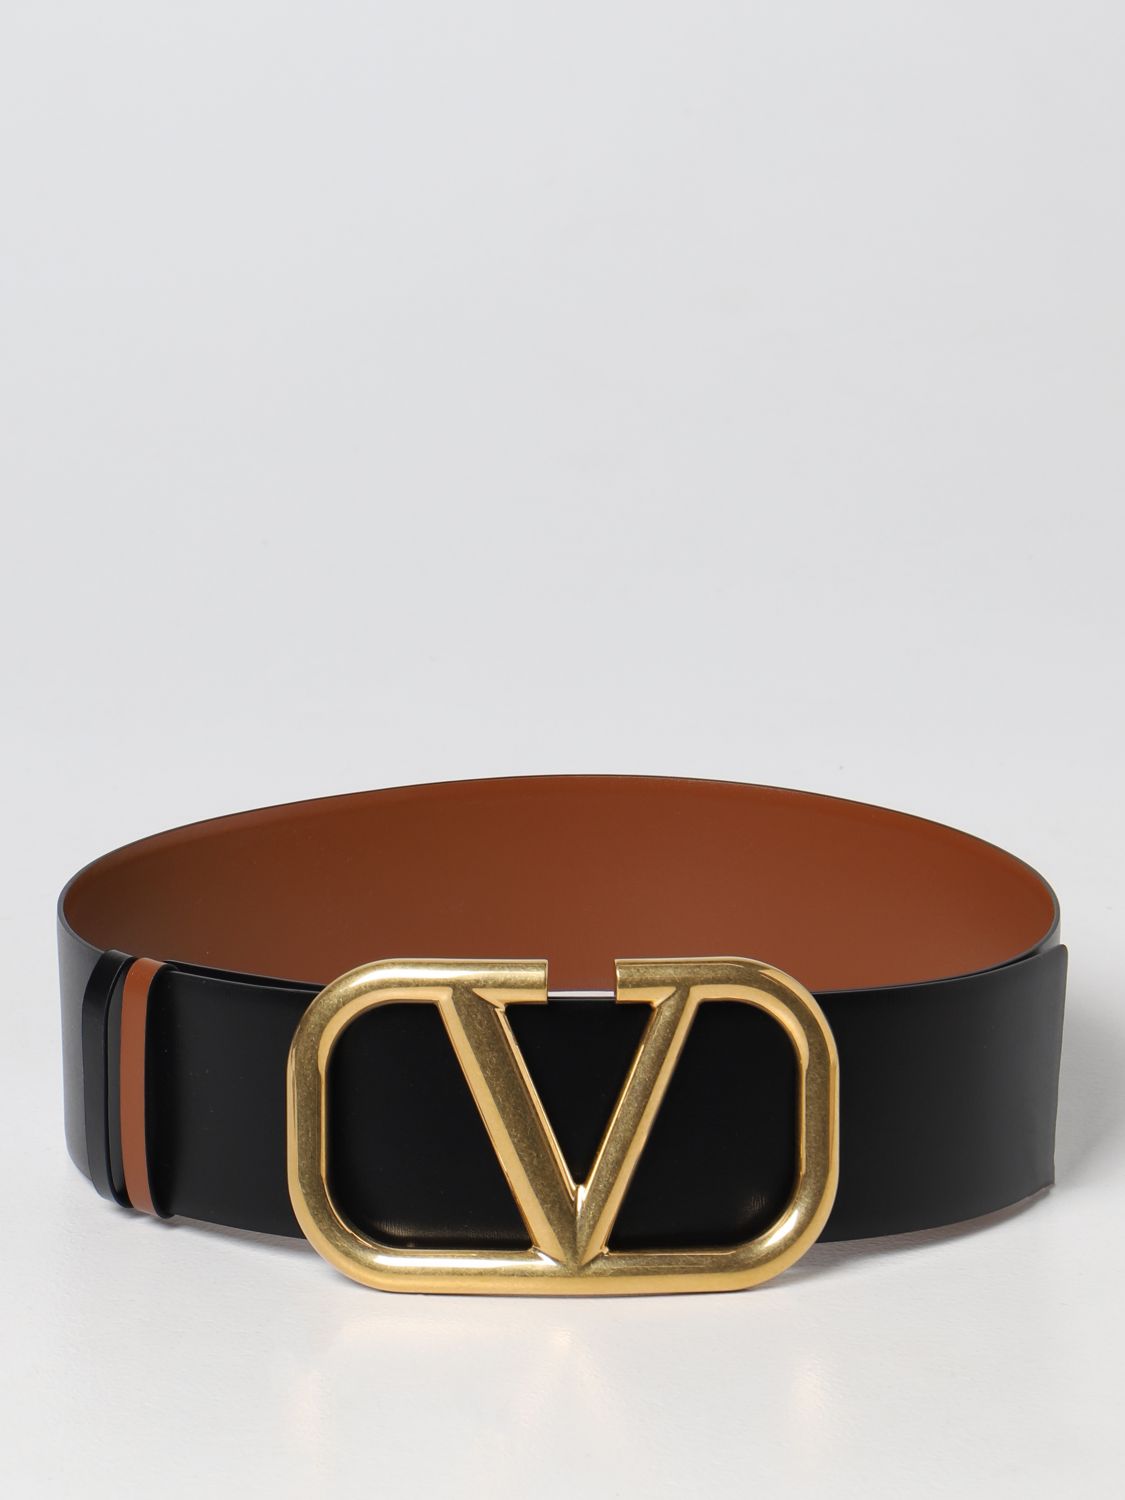 Brighten Memory airplane VALENTINO GARAVANI: VLogo leather belt - Leather | Valentino Garavani belt  1W2T0S10ZFR online on GIGLIO.COM